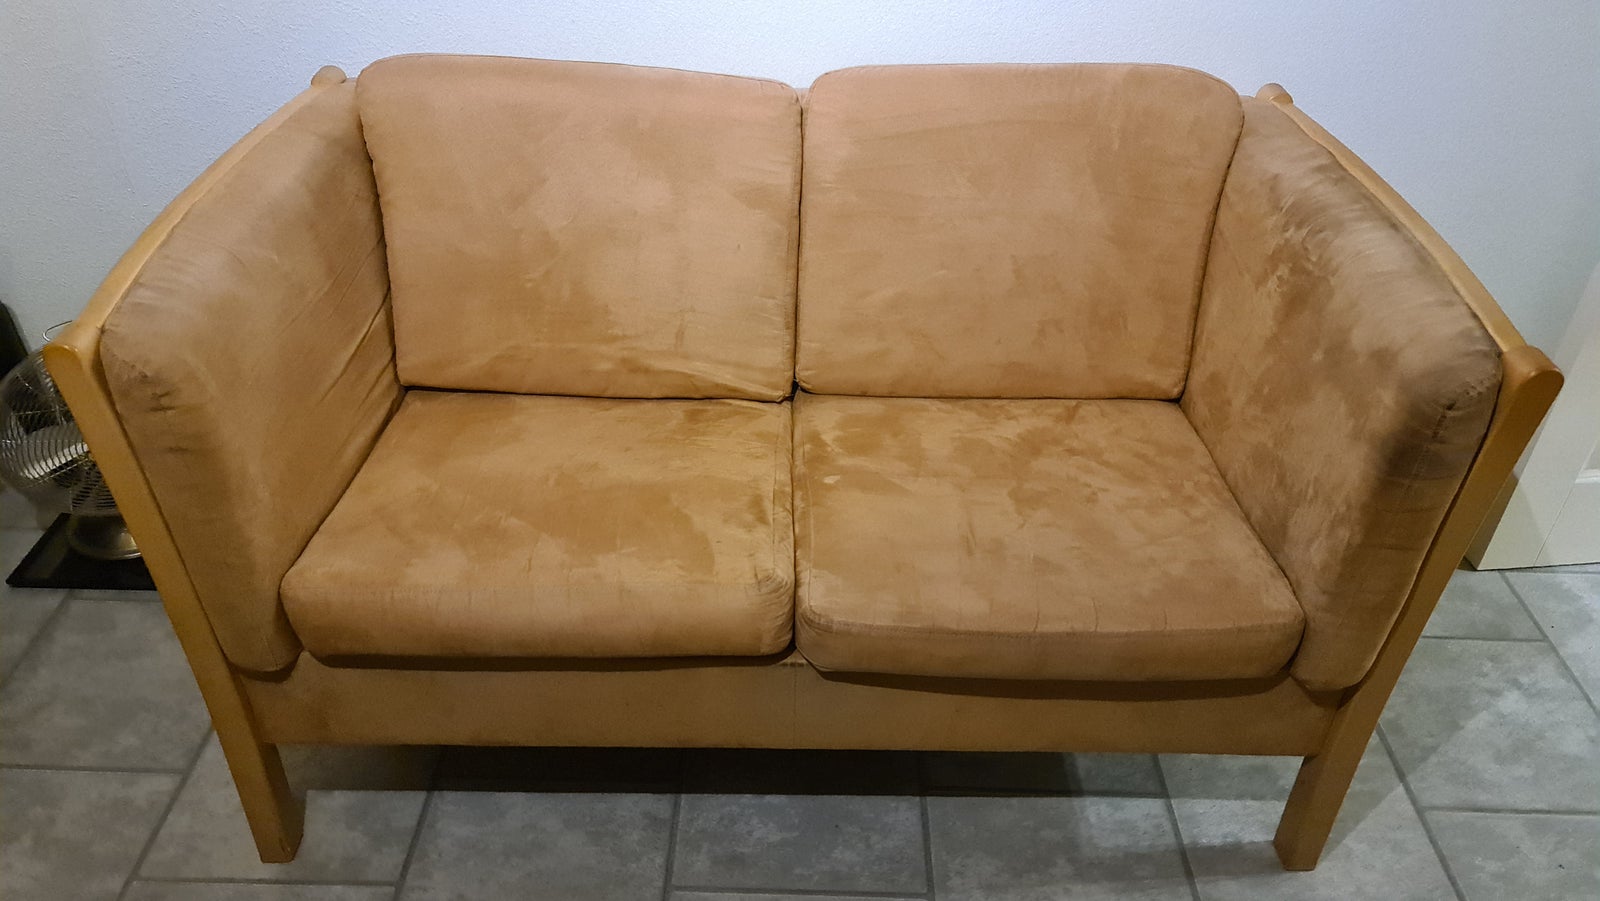 2 personers sofa med microfiber.
Bredde 140 cm...